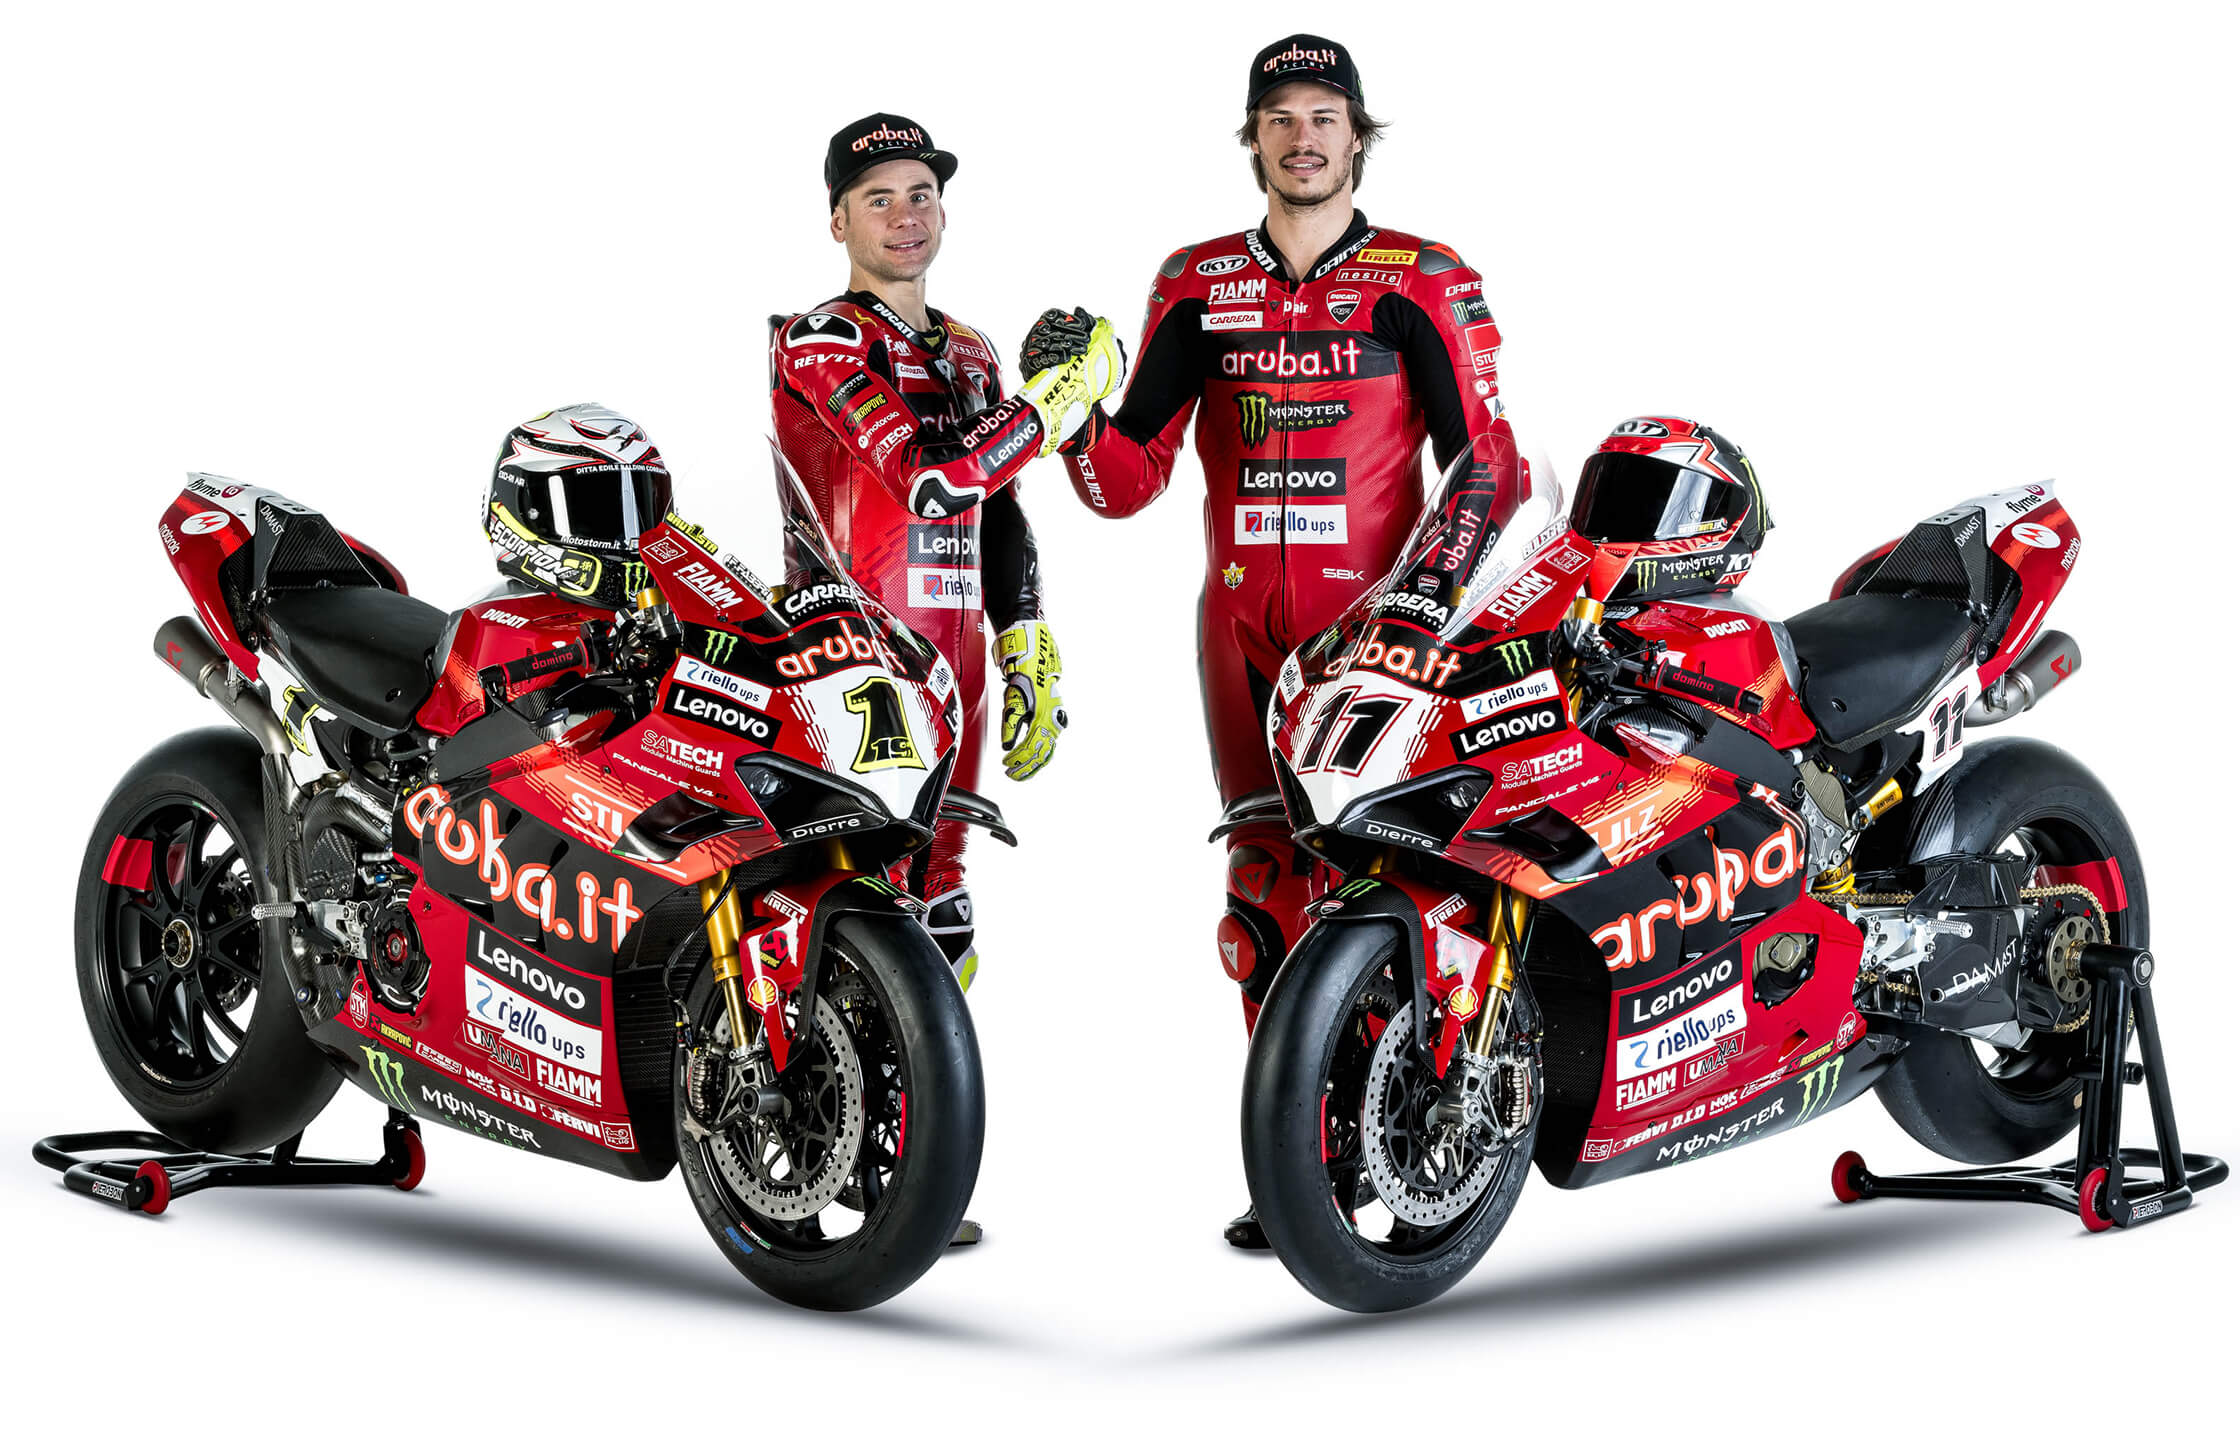 Alvaro Bautista e Nicolò Bulega, i piloti per il team Aruba.it Racing - Ducati Superbike, si stringono la mano